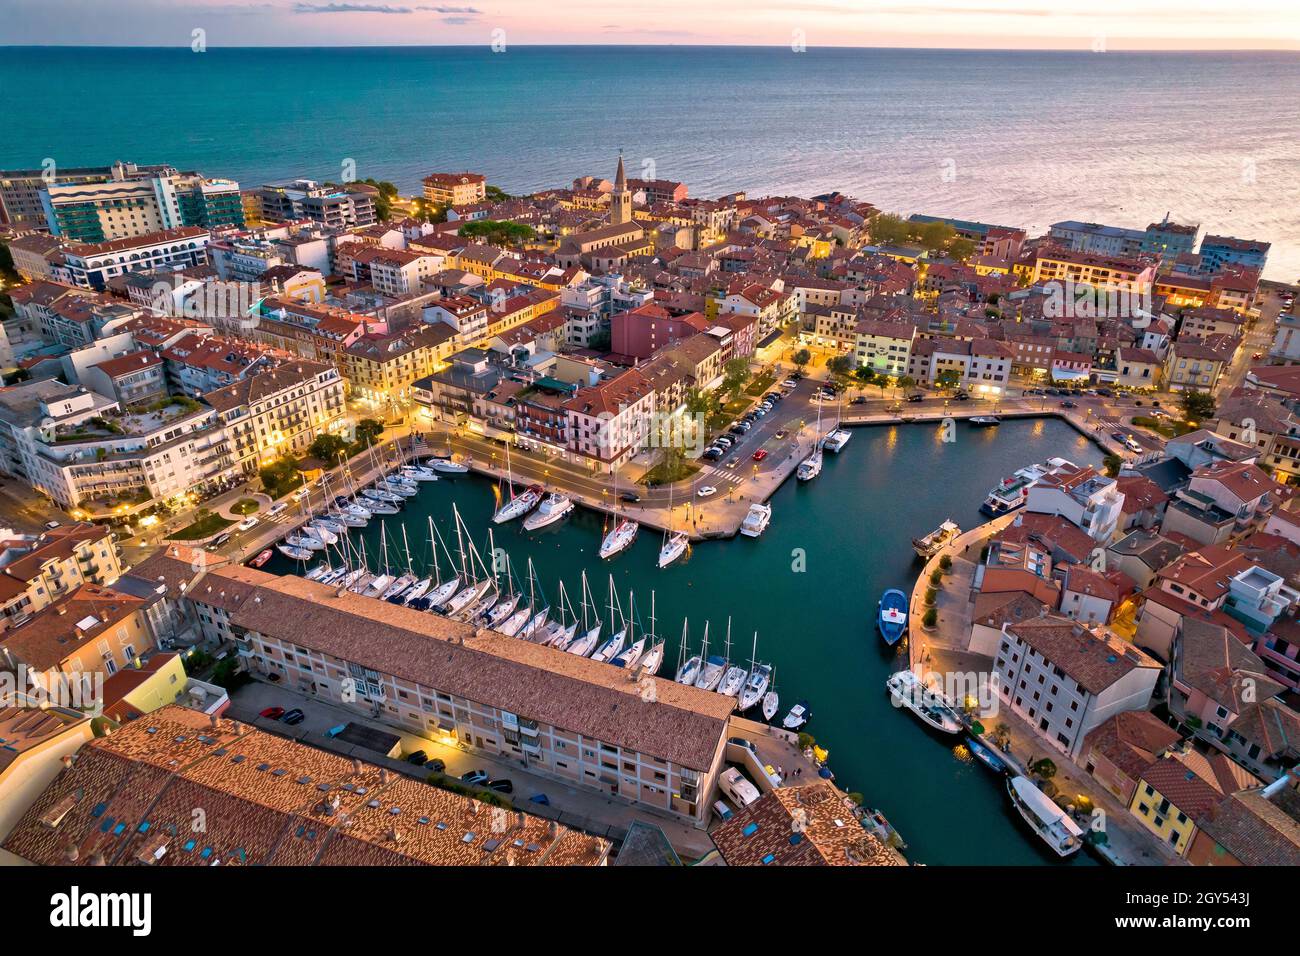 Town of Grado colorful architecture and waterfront aerial evening view, Friuli-Venezia Giulia region of Italy Stock Photo